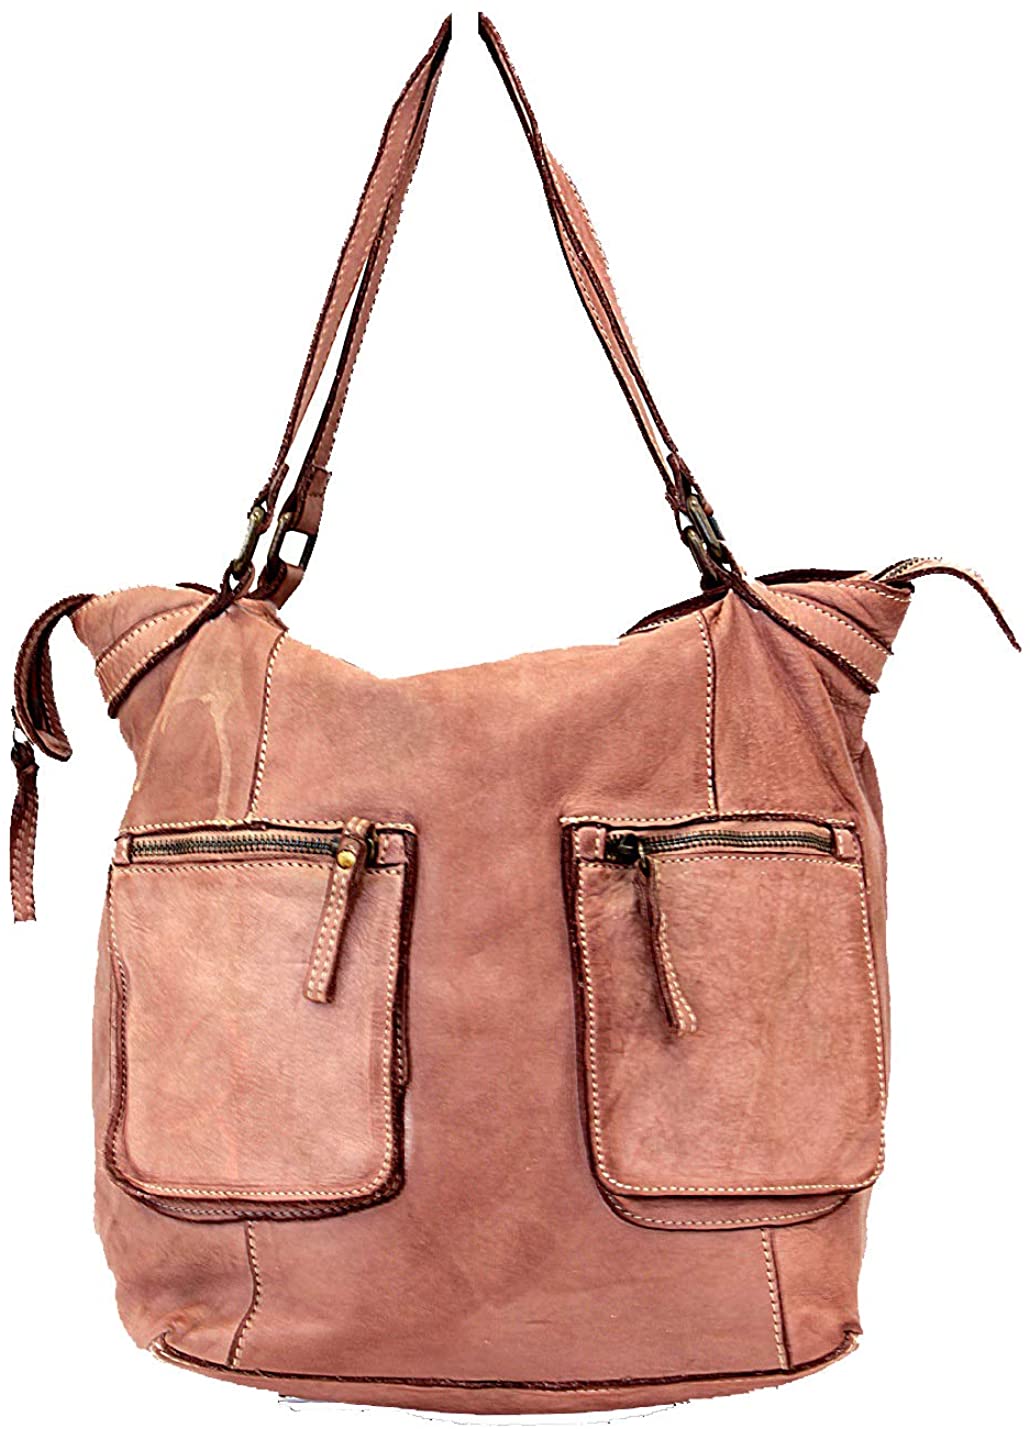 BZNA Bag Allegra rosa Italy Designer Damen Handtasche Schultertasche Tasche Leder Shopper Neu